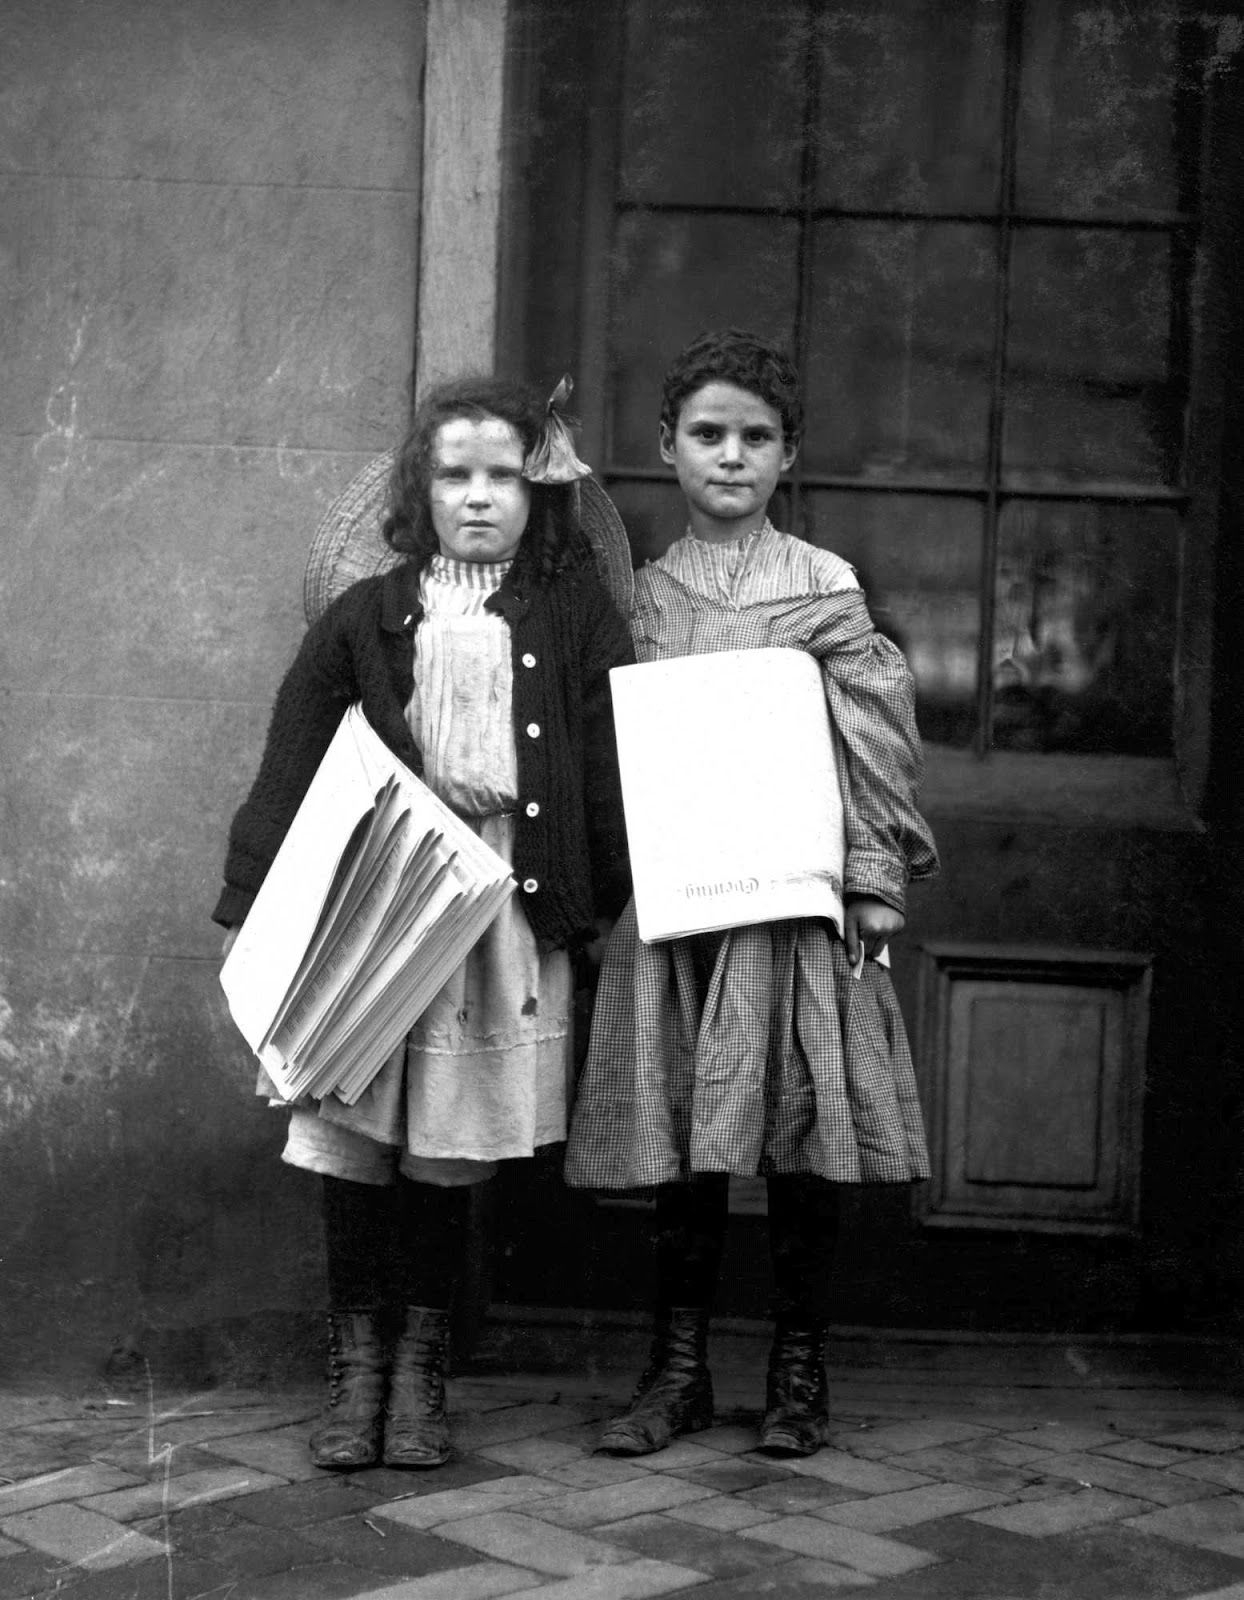 Vintage photo by Lewis Hine: Newsies, Two news girls, Wilmington, Delaware, 1910